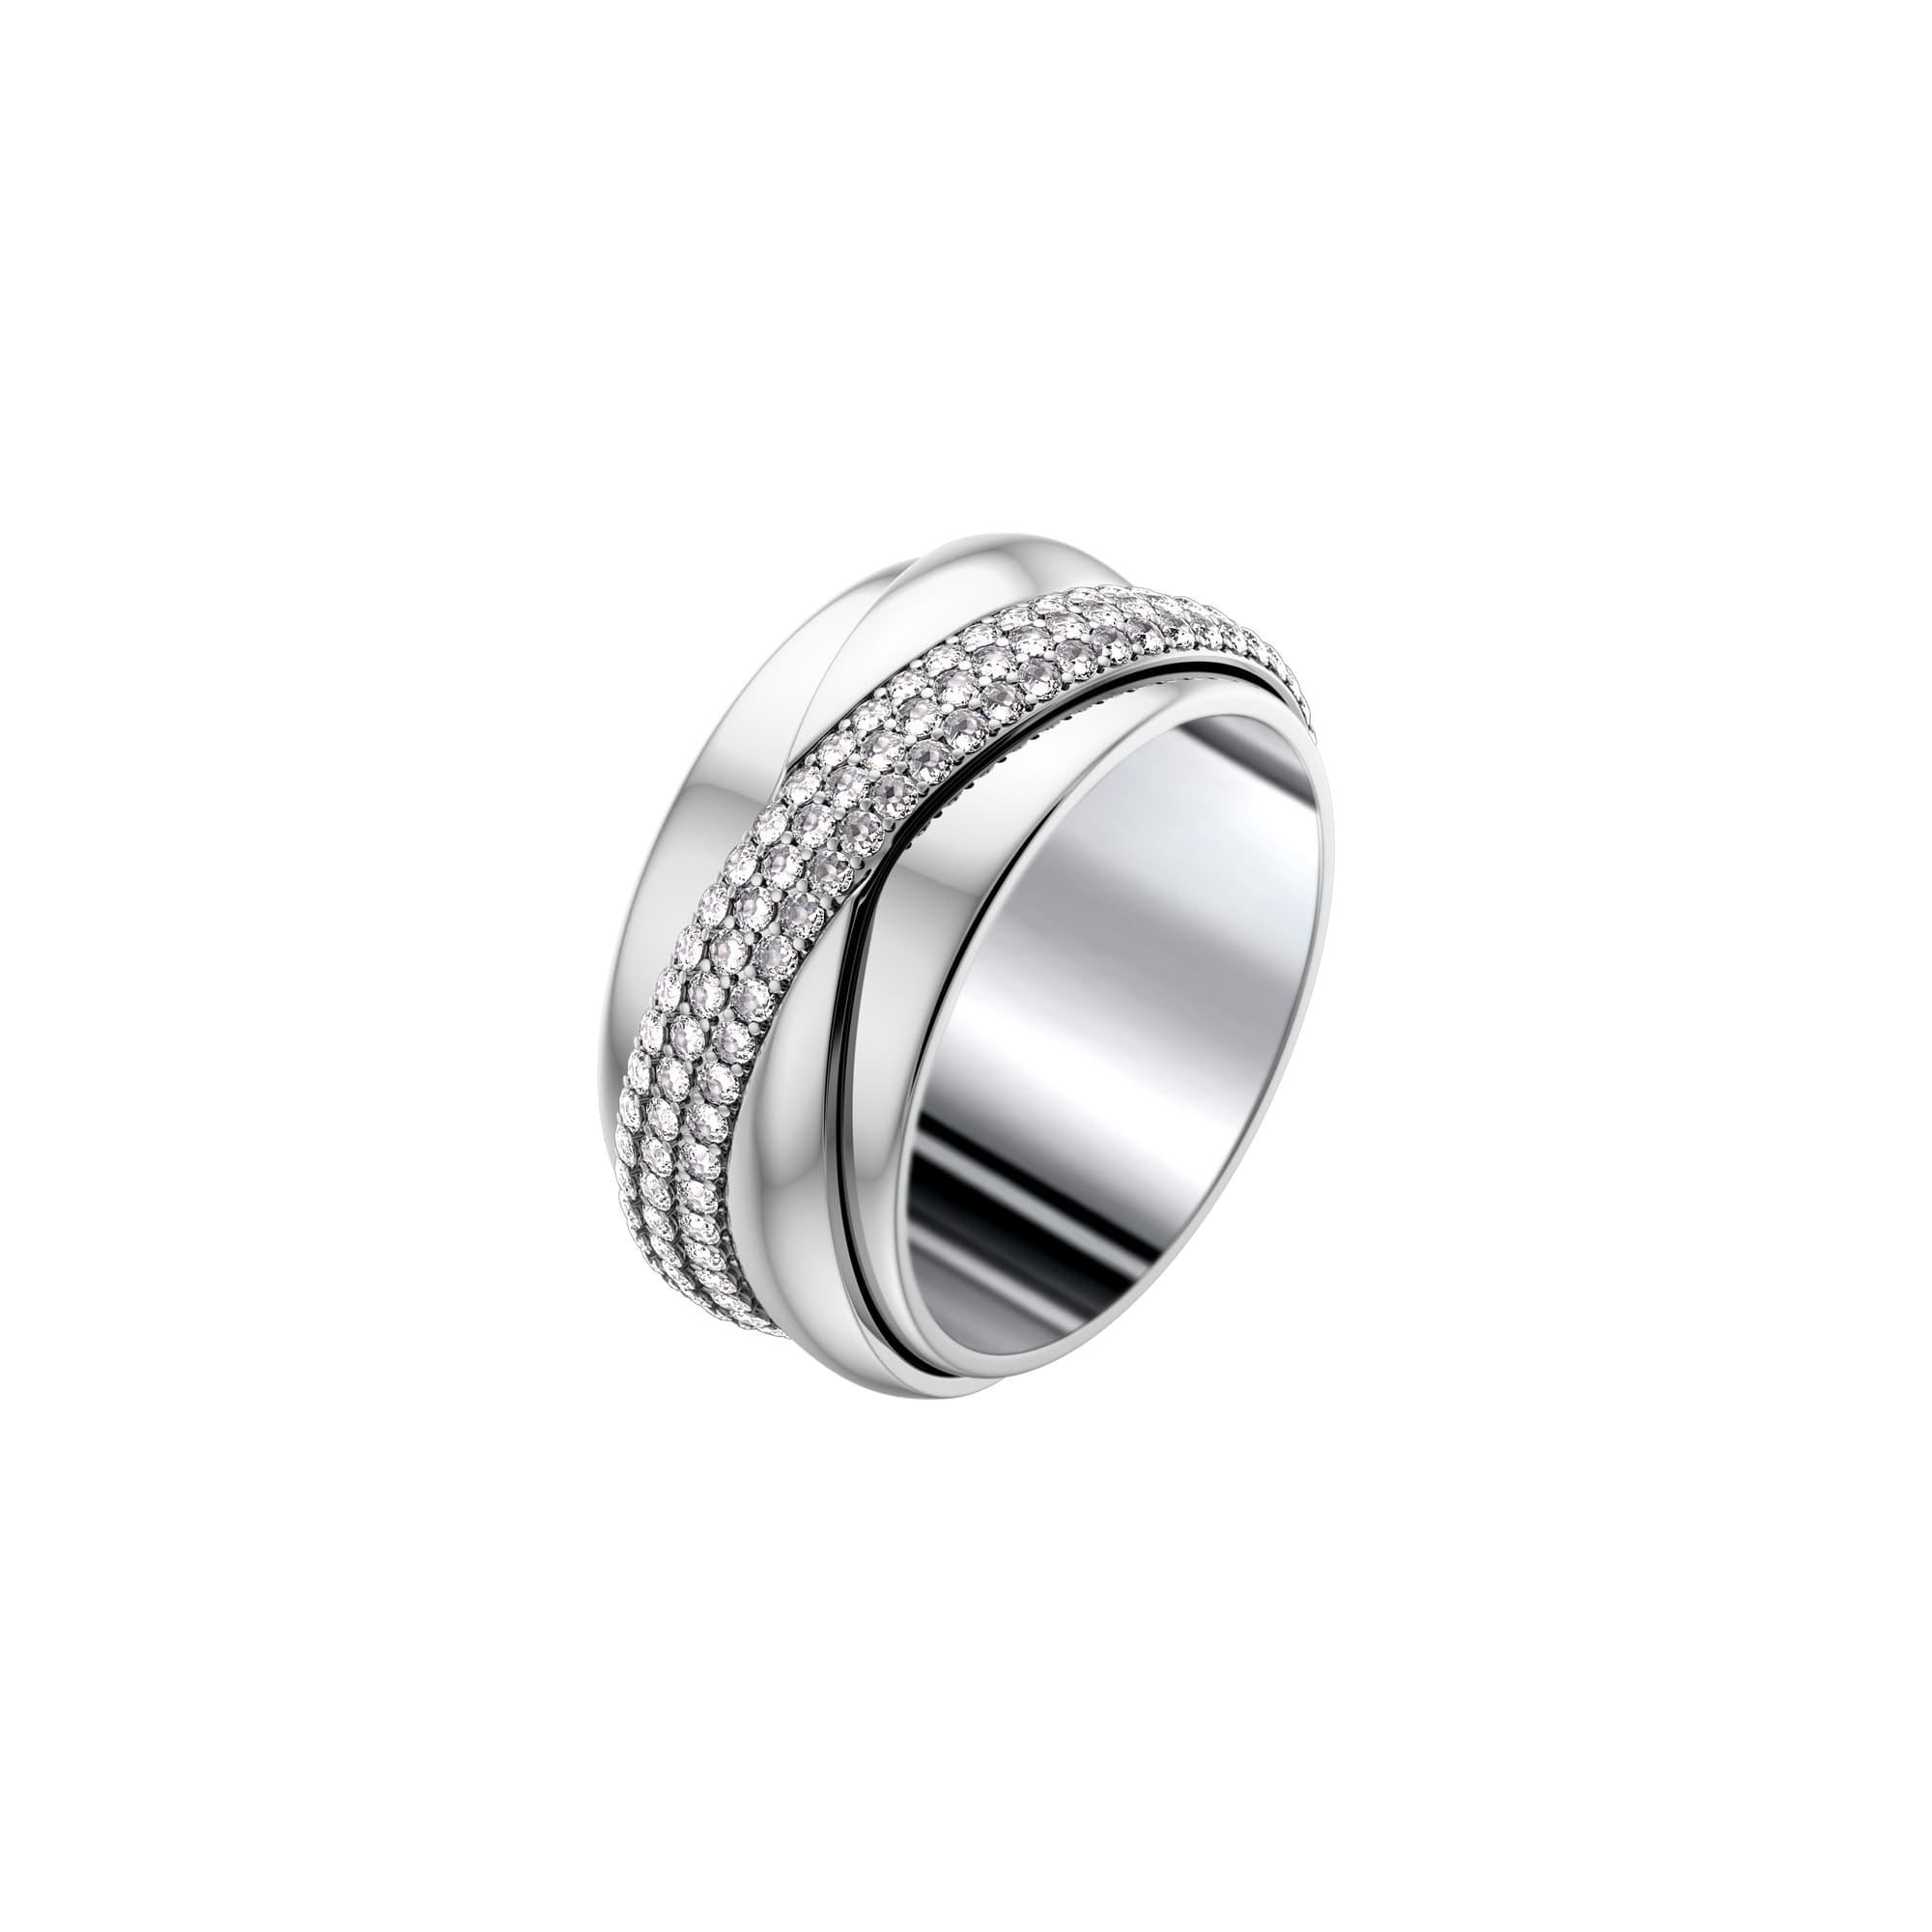 White gold Diamond Ring G34PY200 - Piaget Luxury Jewelry Online